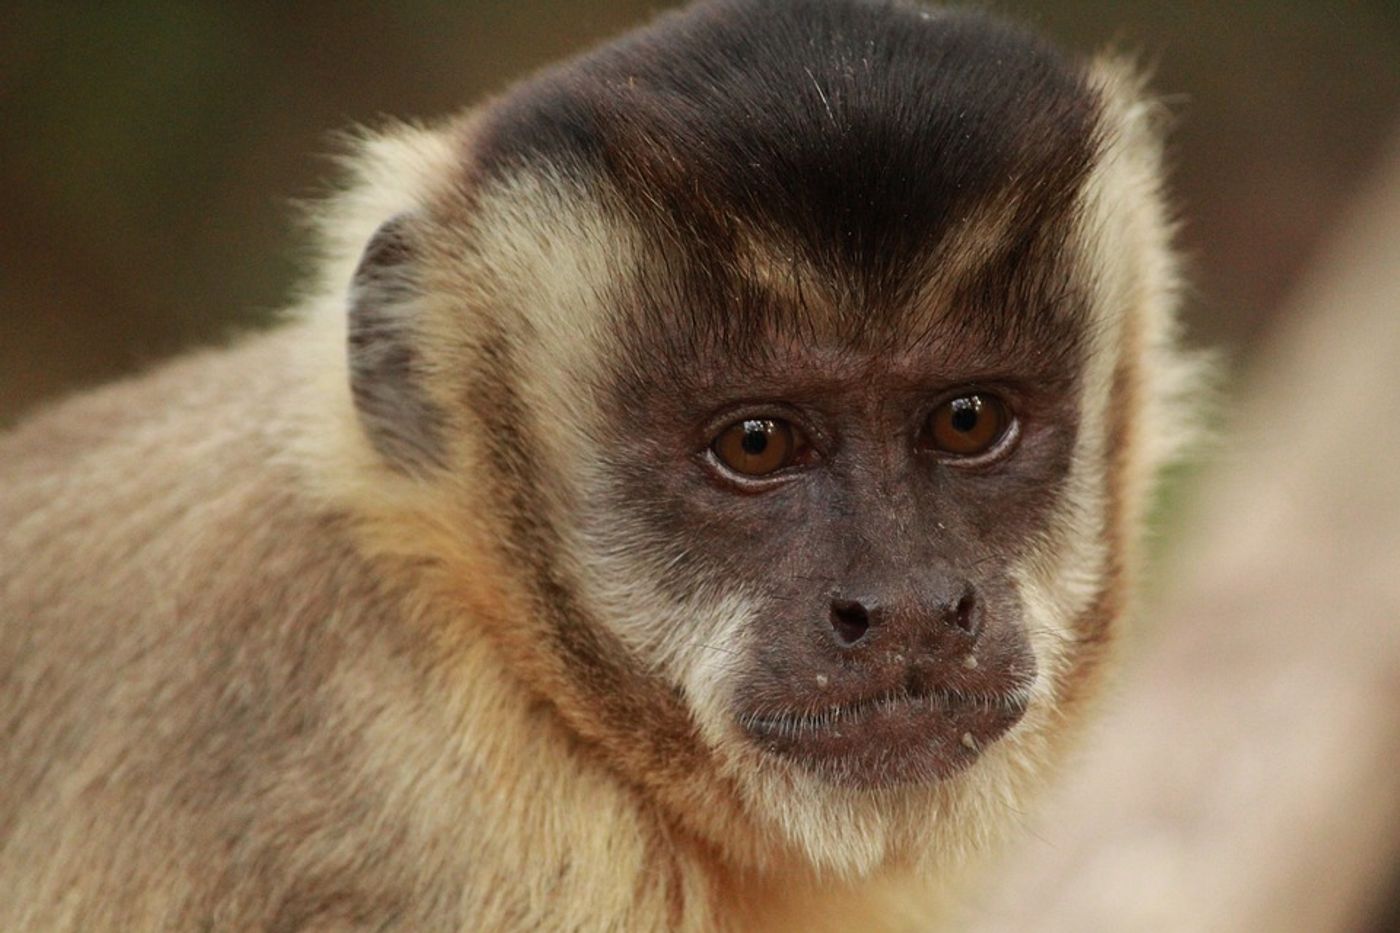 A brown capuchin monkey